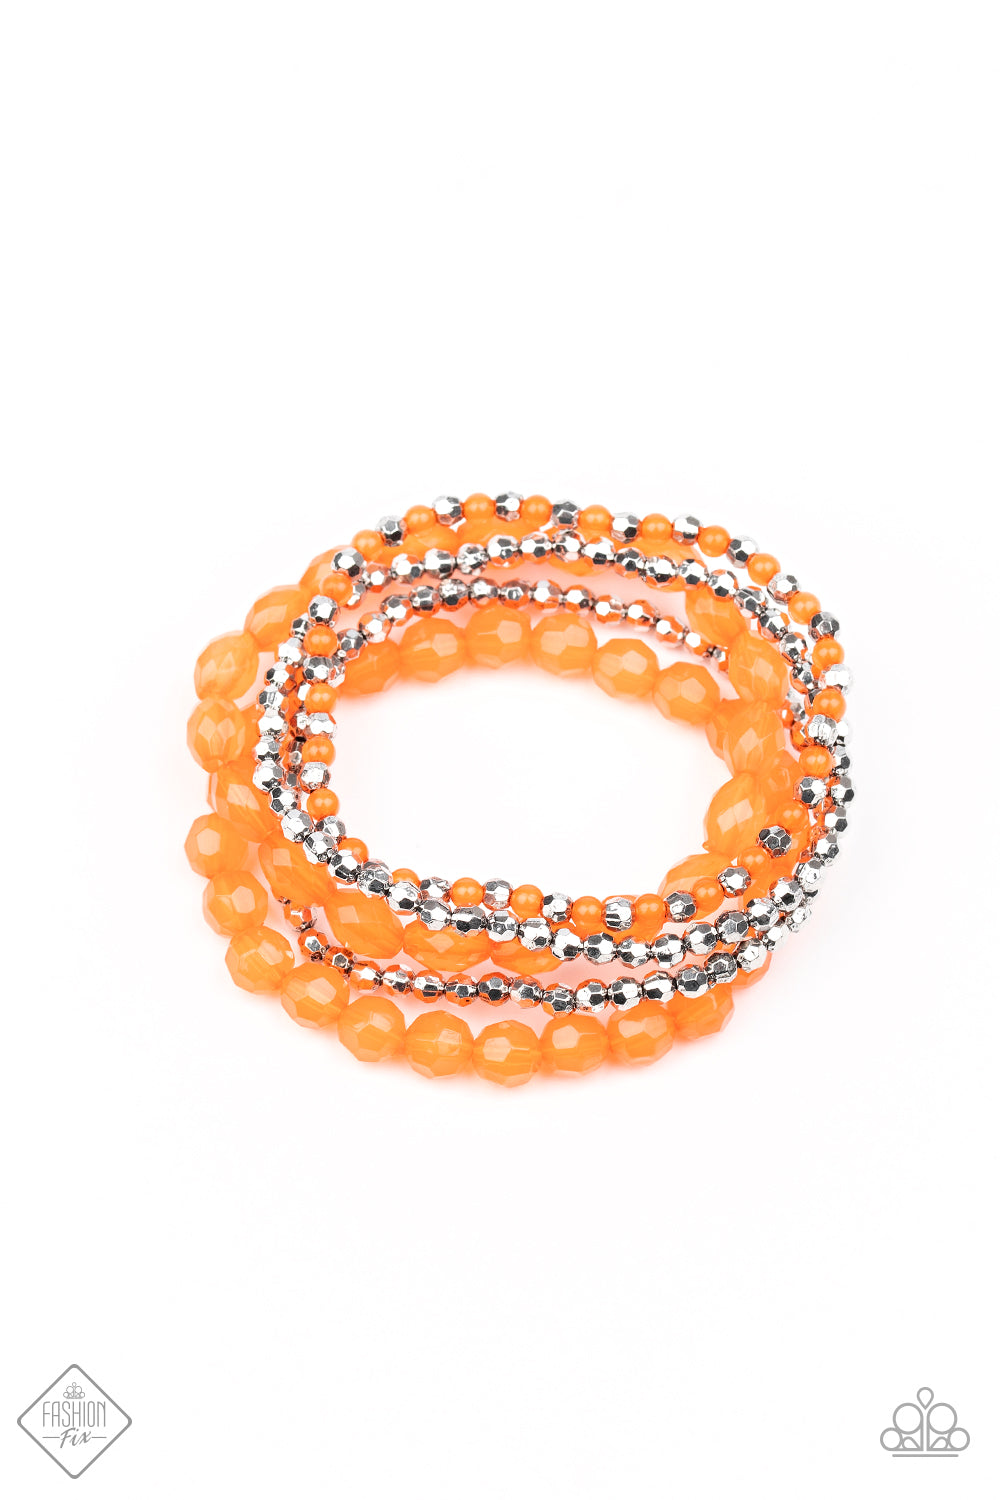 Paparazzi Accessories - Sugary Sweet - Orange Bracelet Fashion Fix June 2020